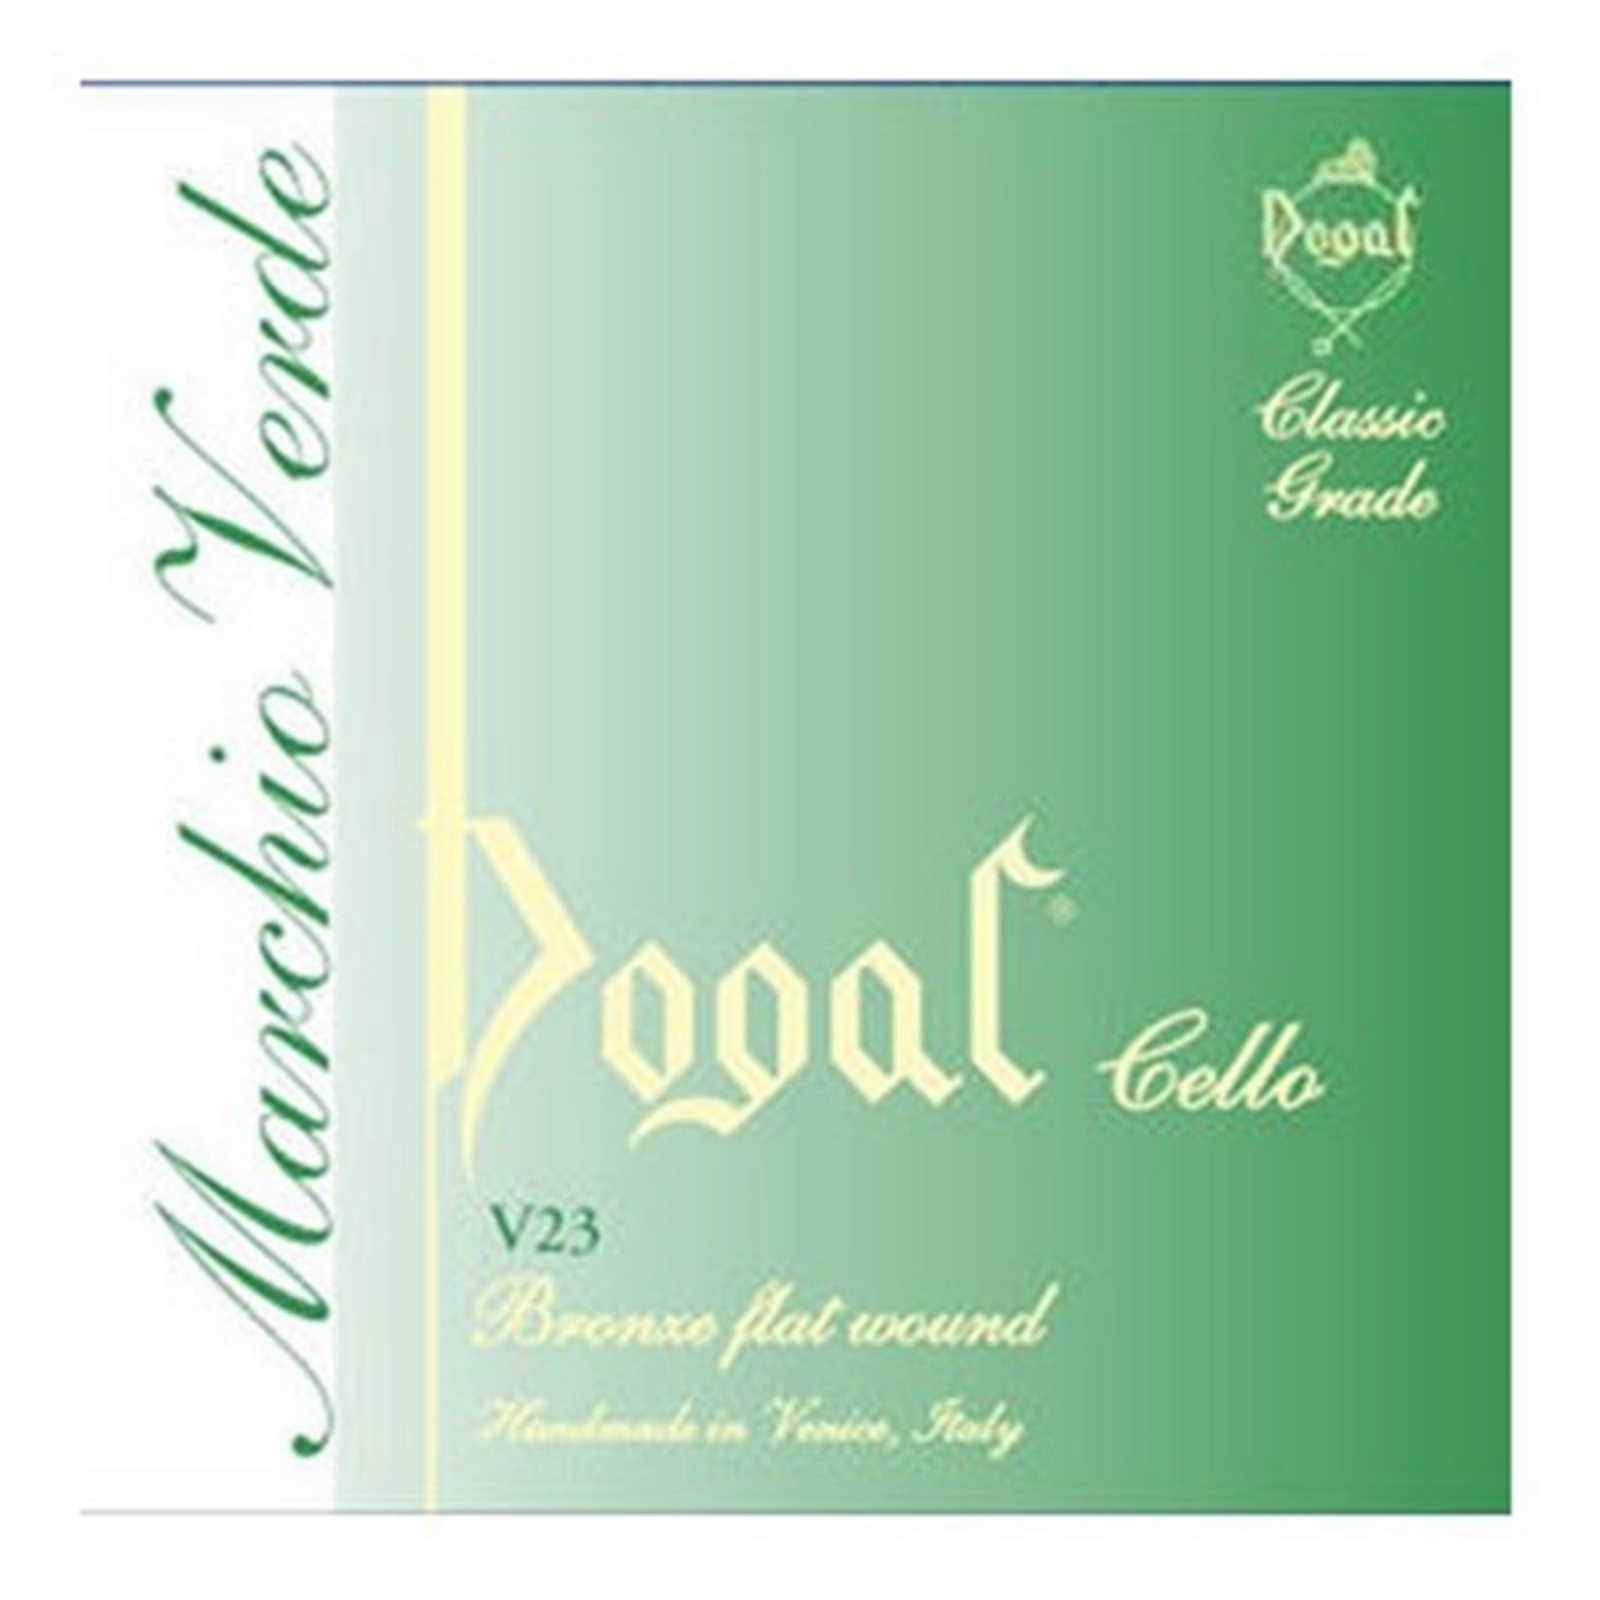 Dogal Cello String Set 1-2 Size